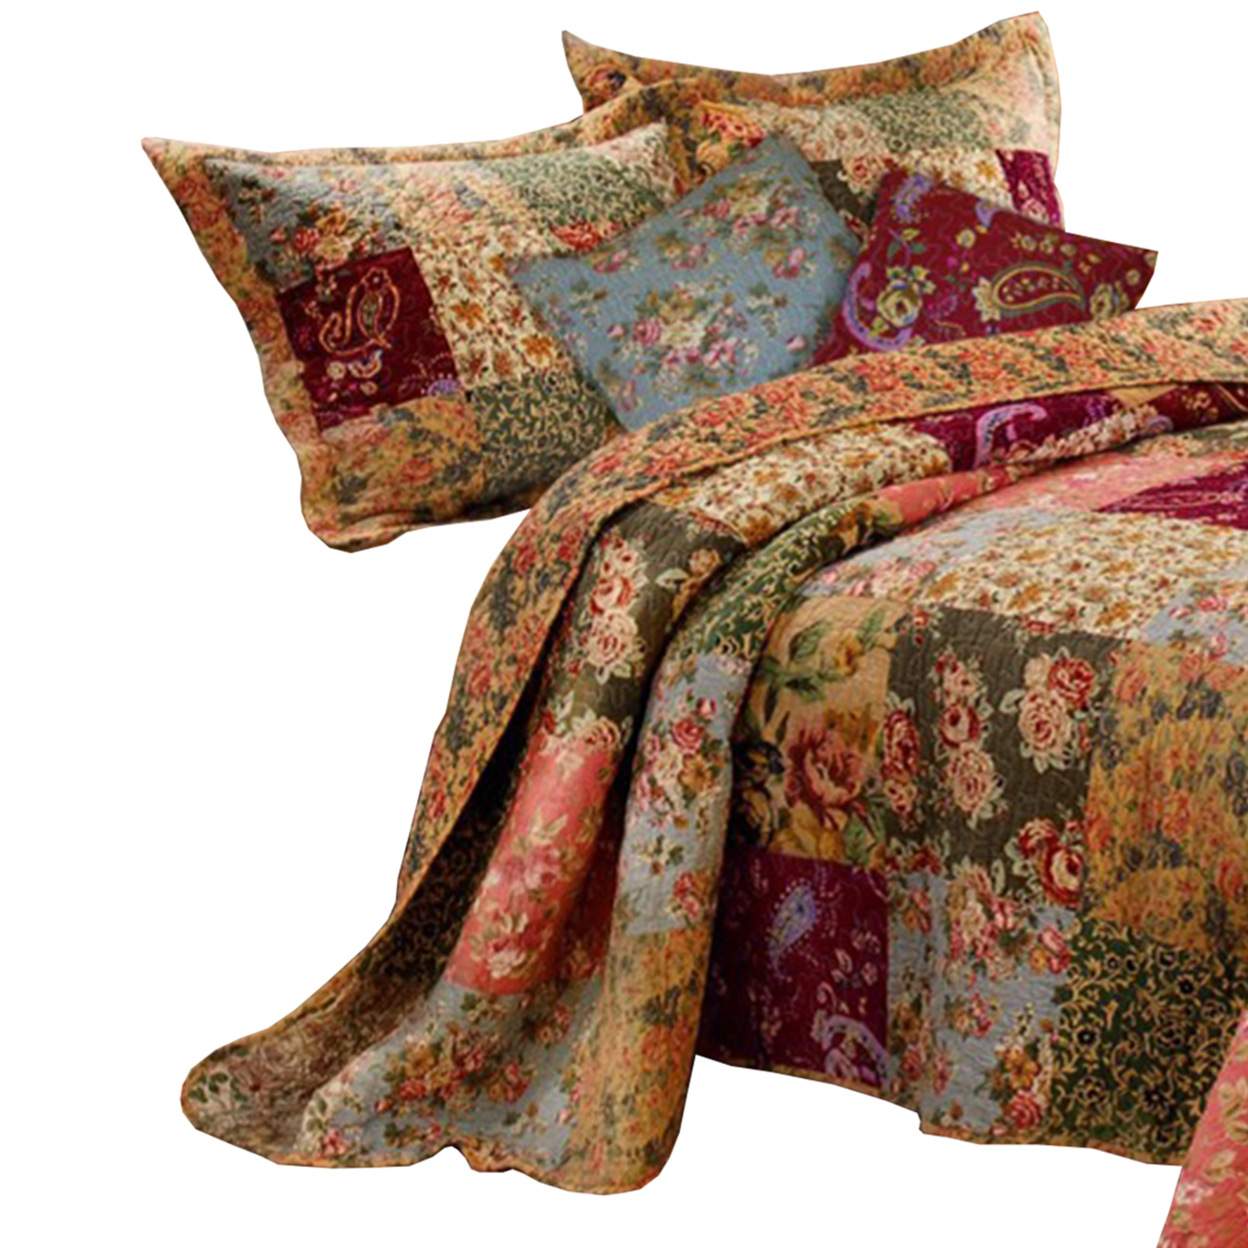 Kamet 5 Piece Fabric Queen Size Quilt Set With Floral Prints, Multicolor- Saltoro Sherpi